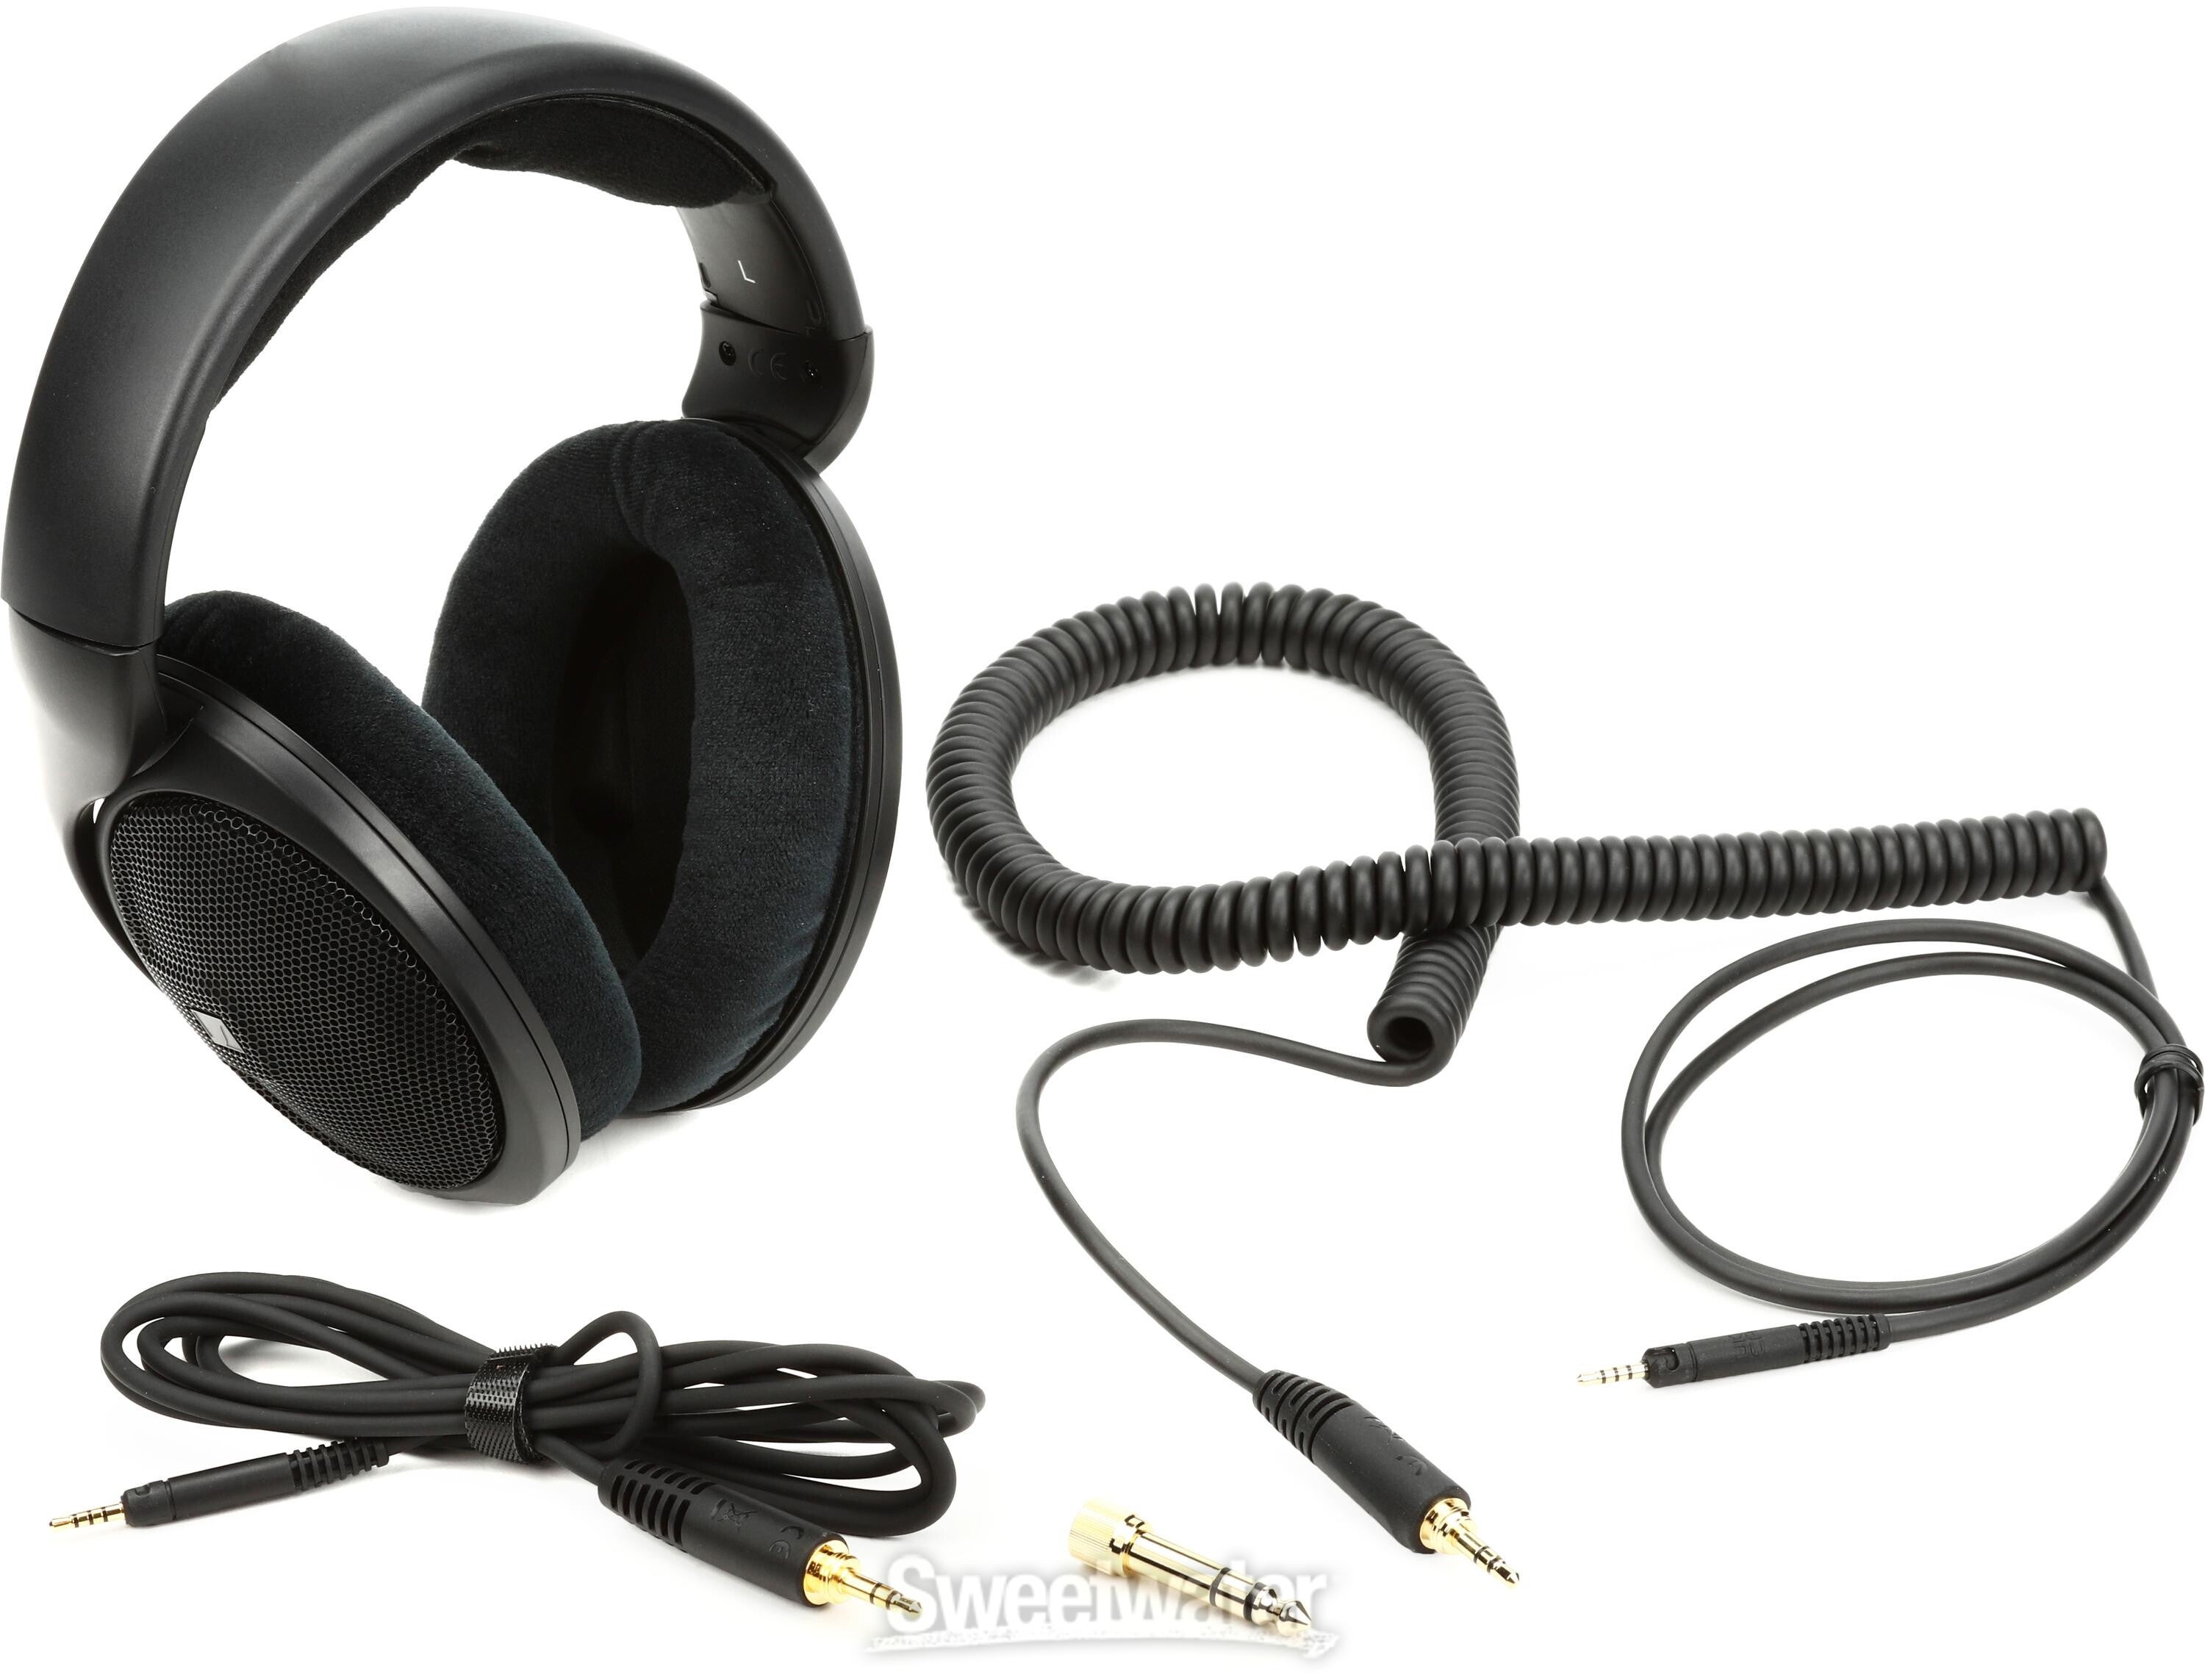 Sennheiser HD 400 Pro Reference Headphones | Sweetwater